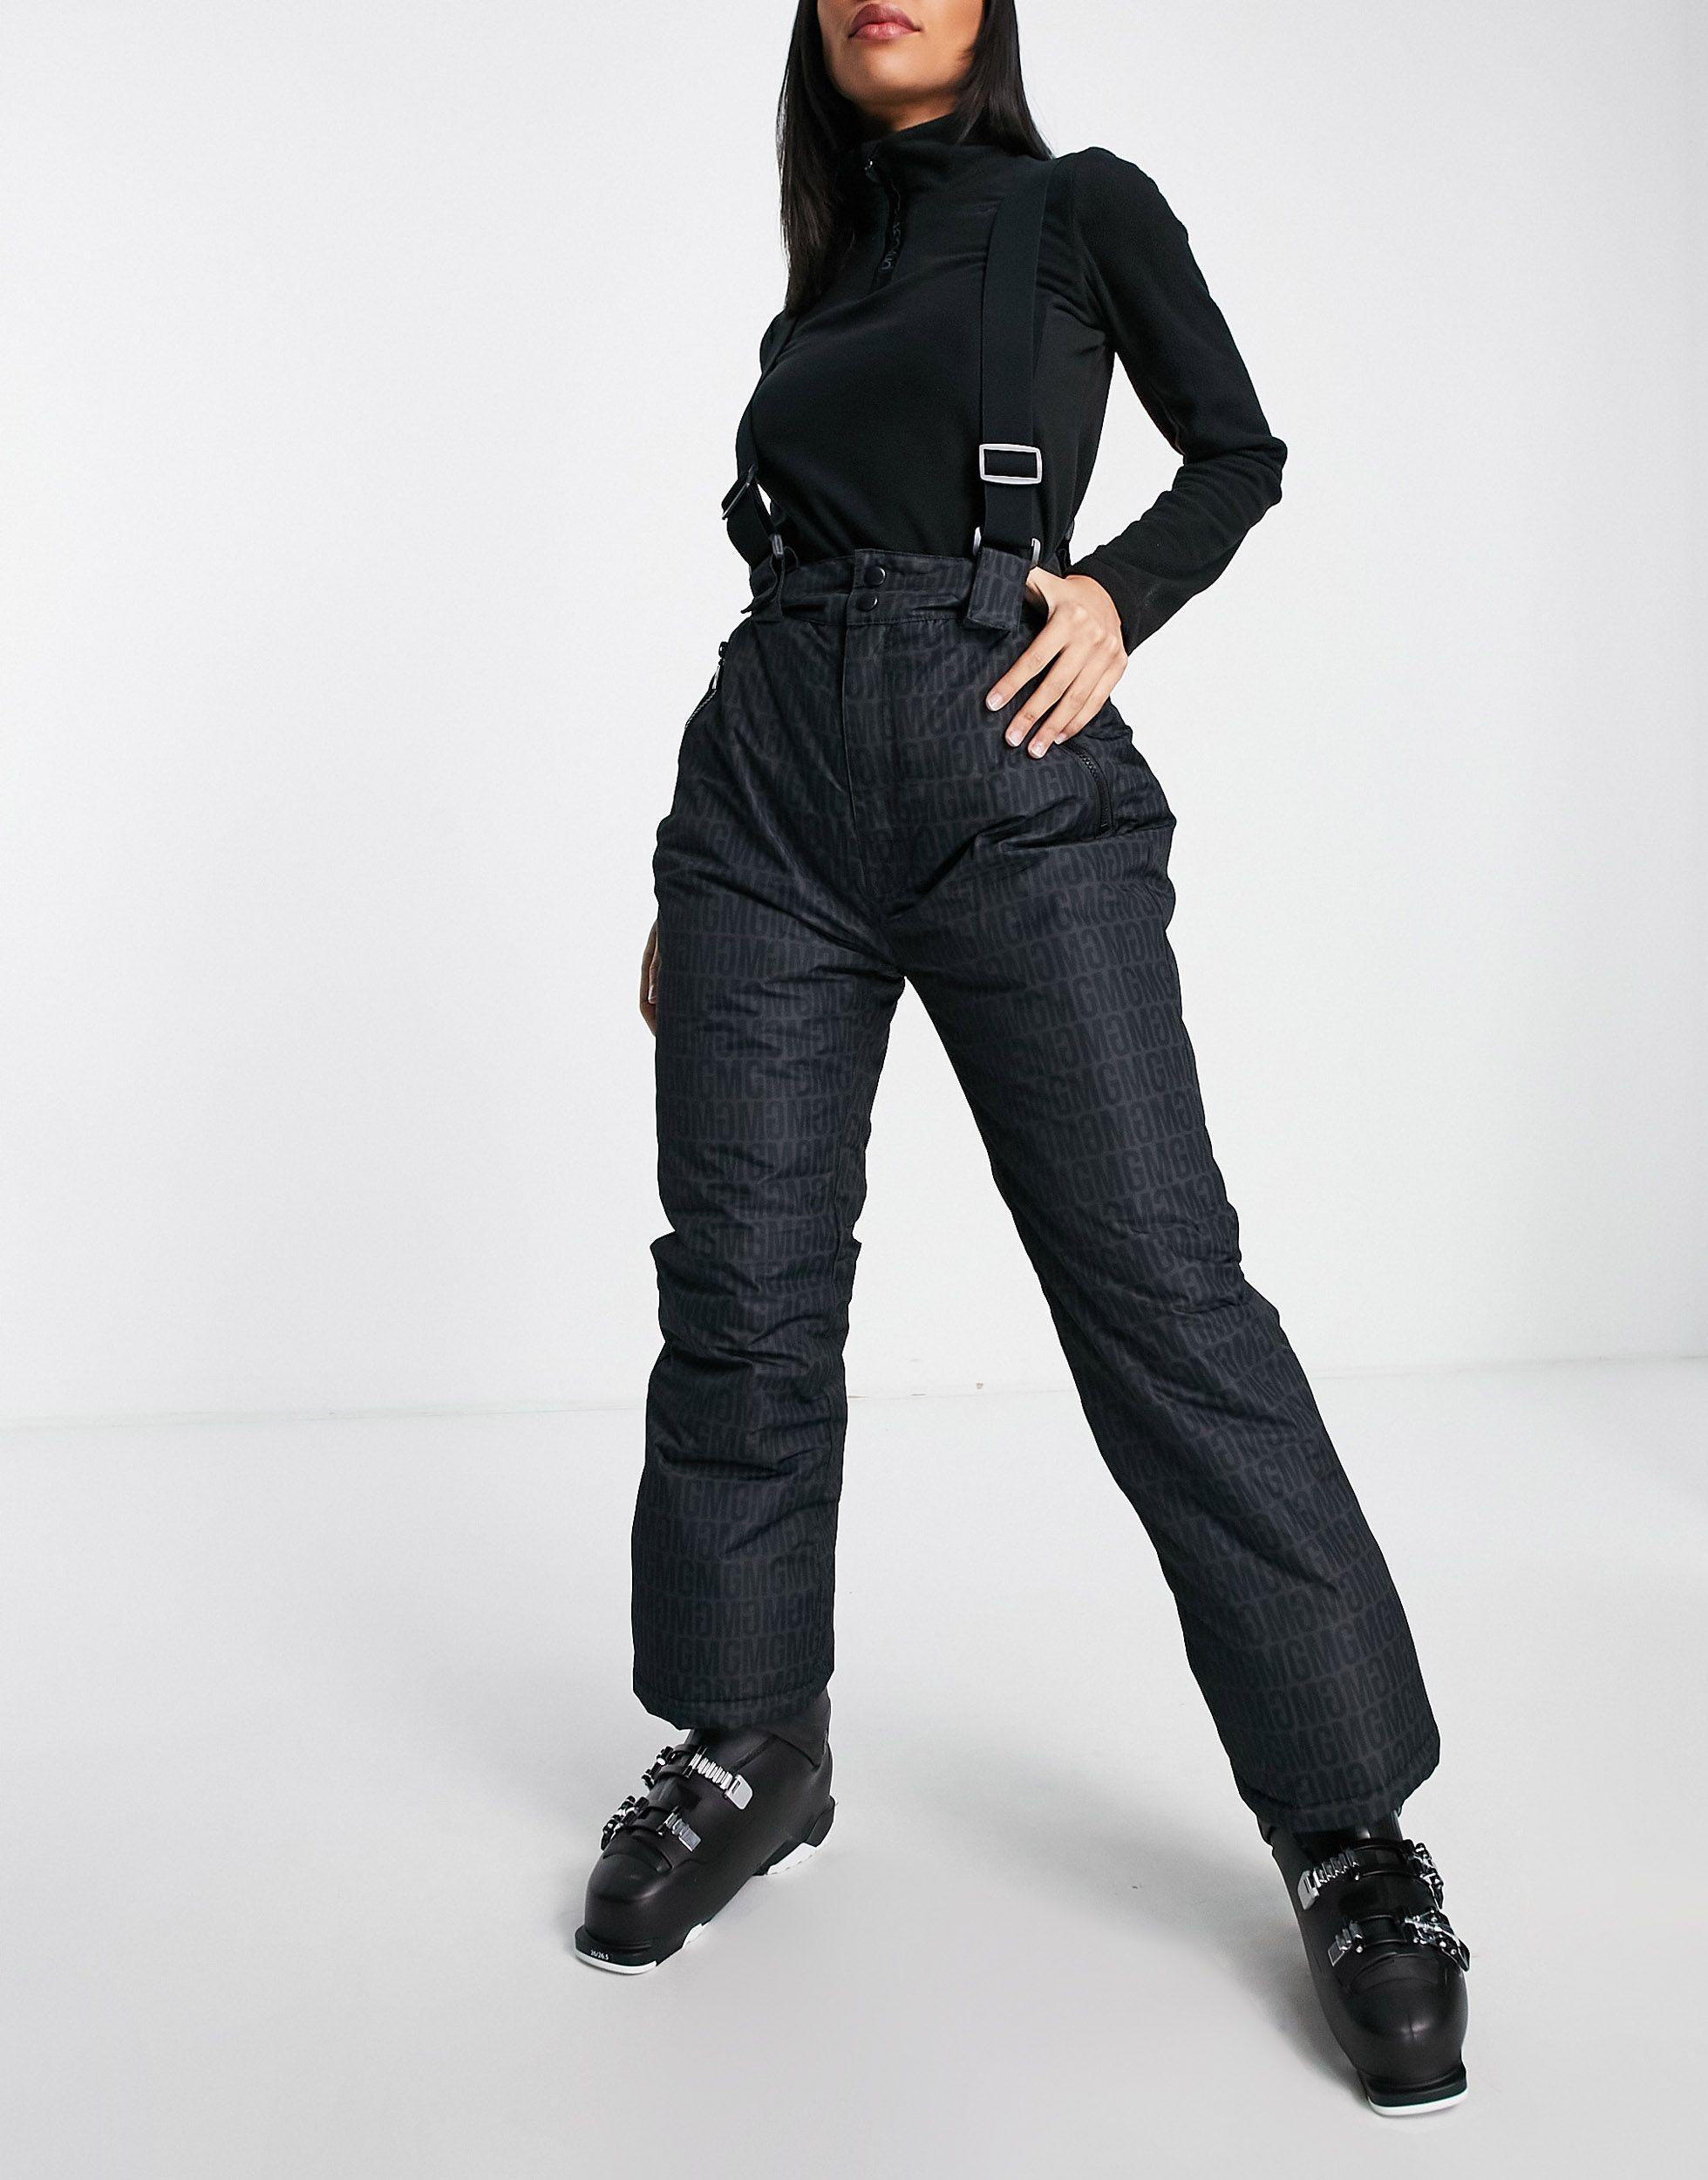 https://cdna.lystit.com/photos/asos/848c7079/missguided-designer-Black-Ski-Snowboard-Trousers.jpeg